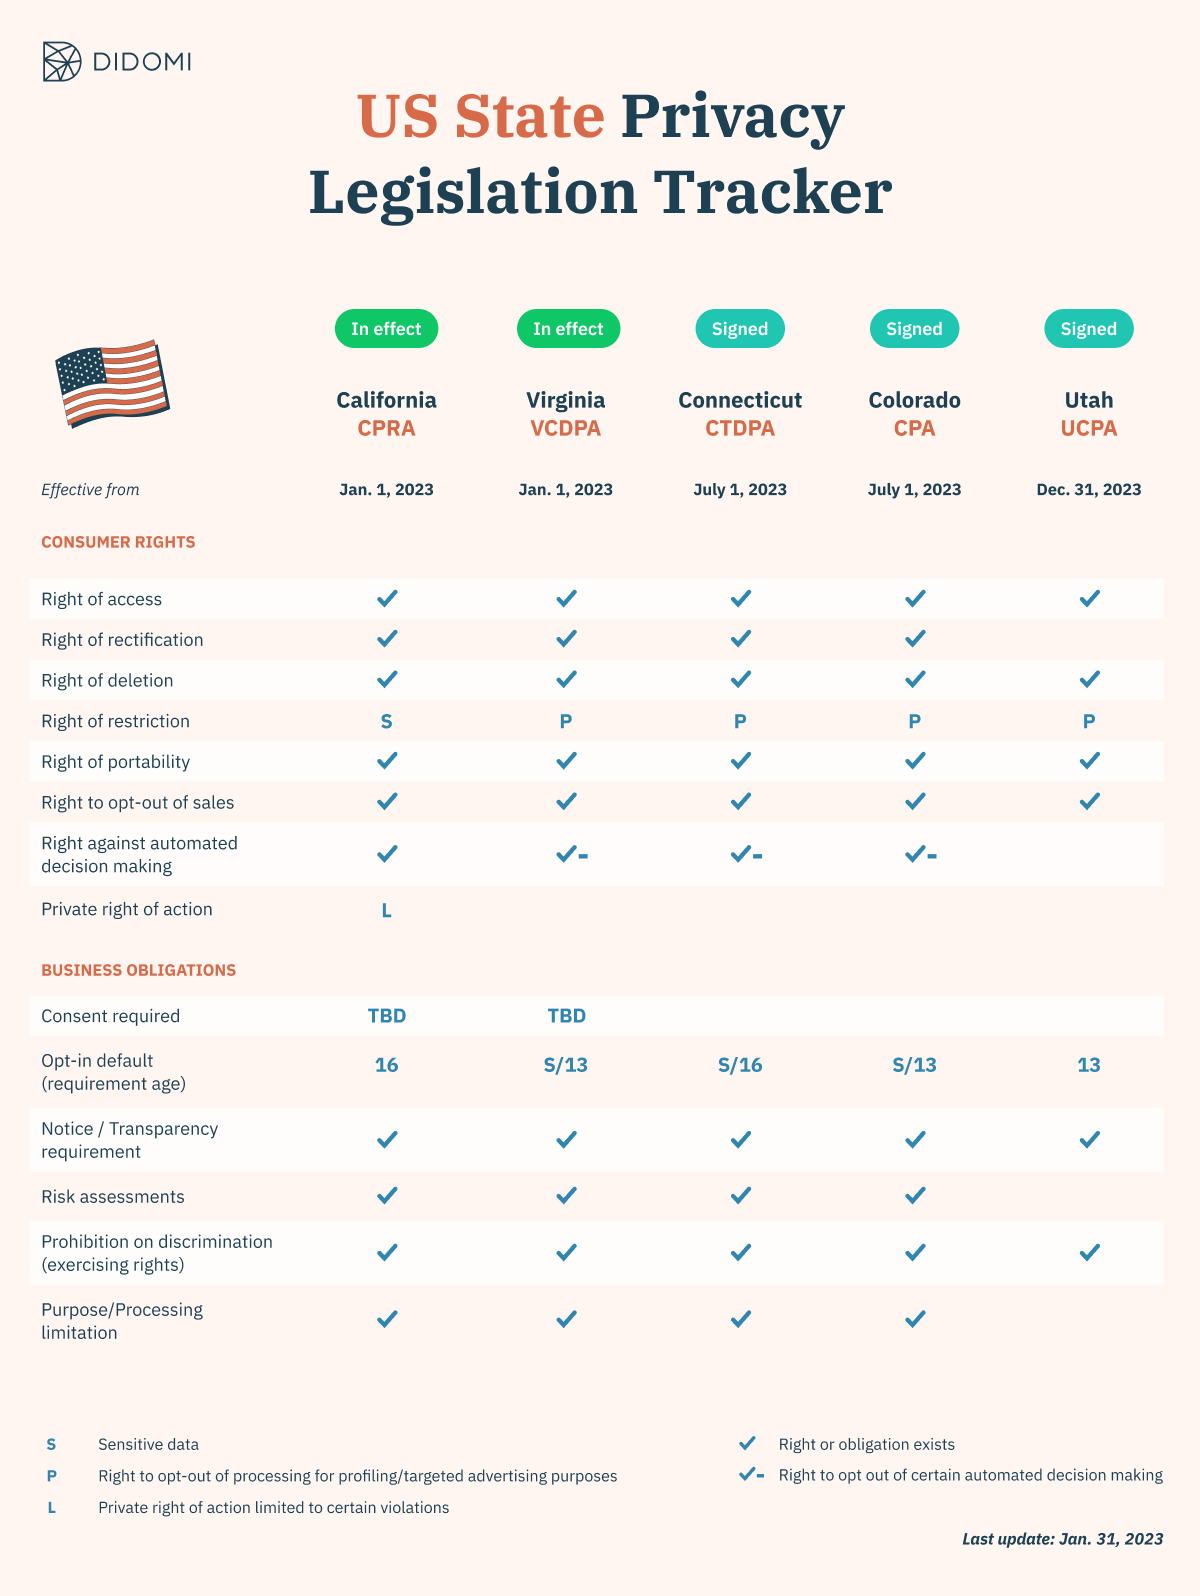 Didomi - US Legislation tracker (January 2023)